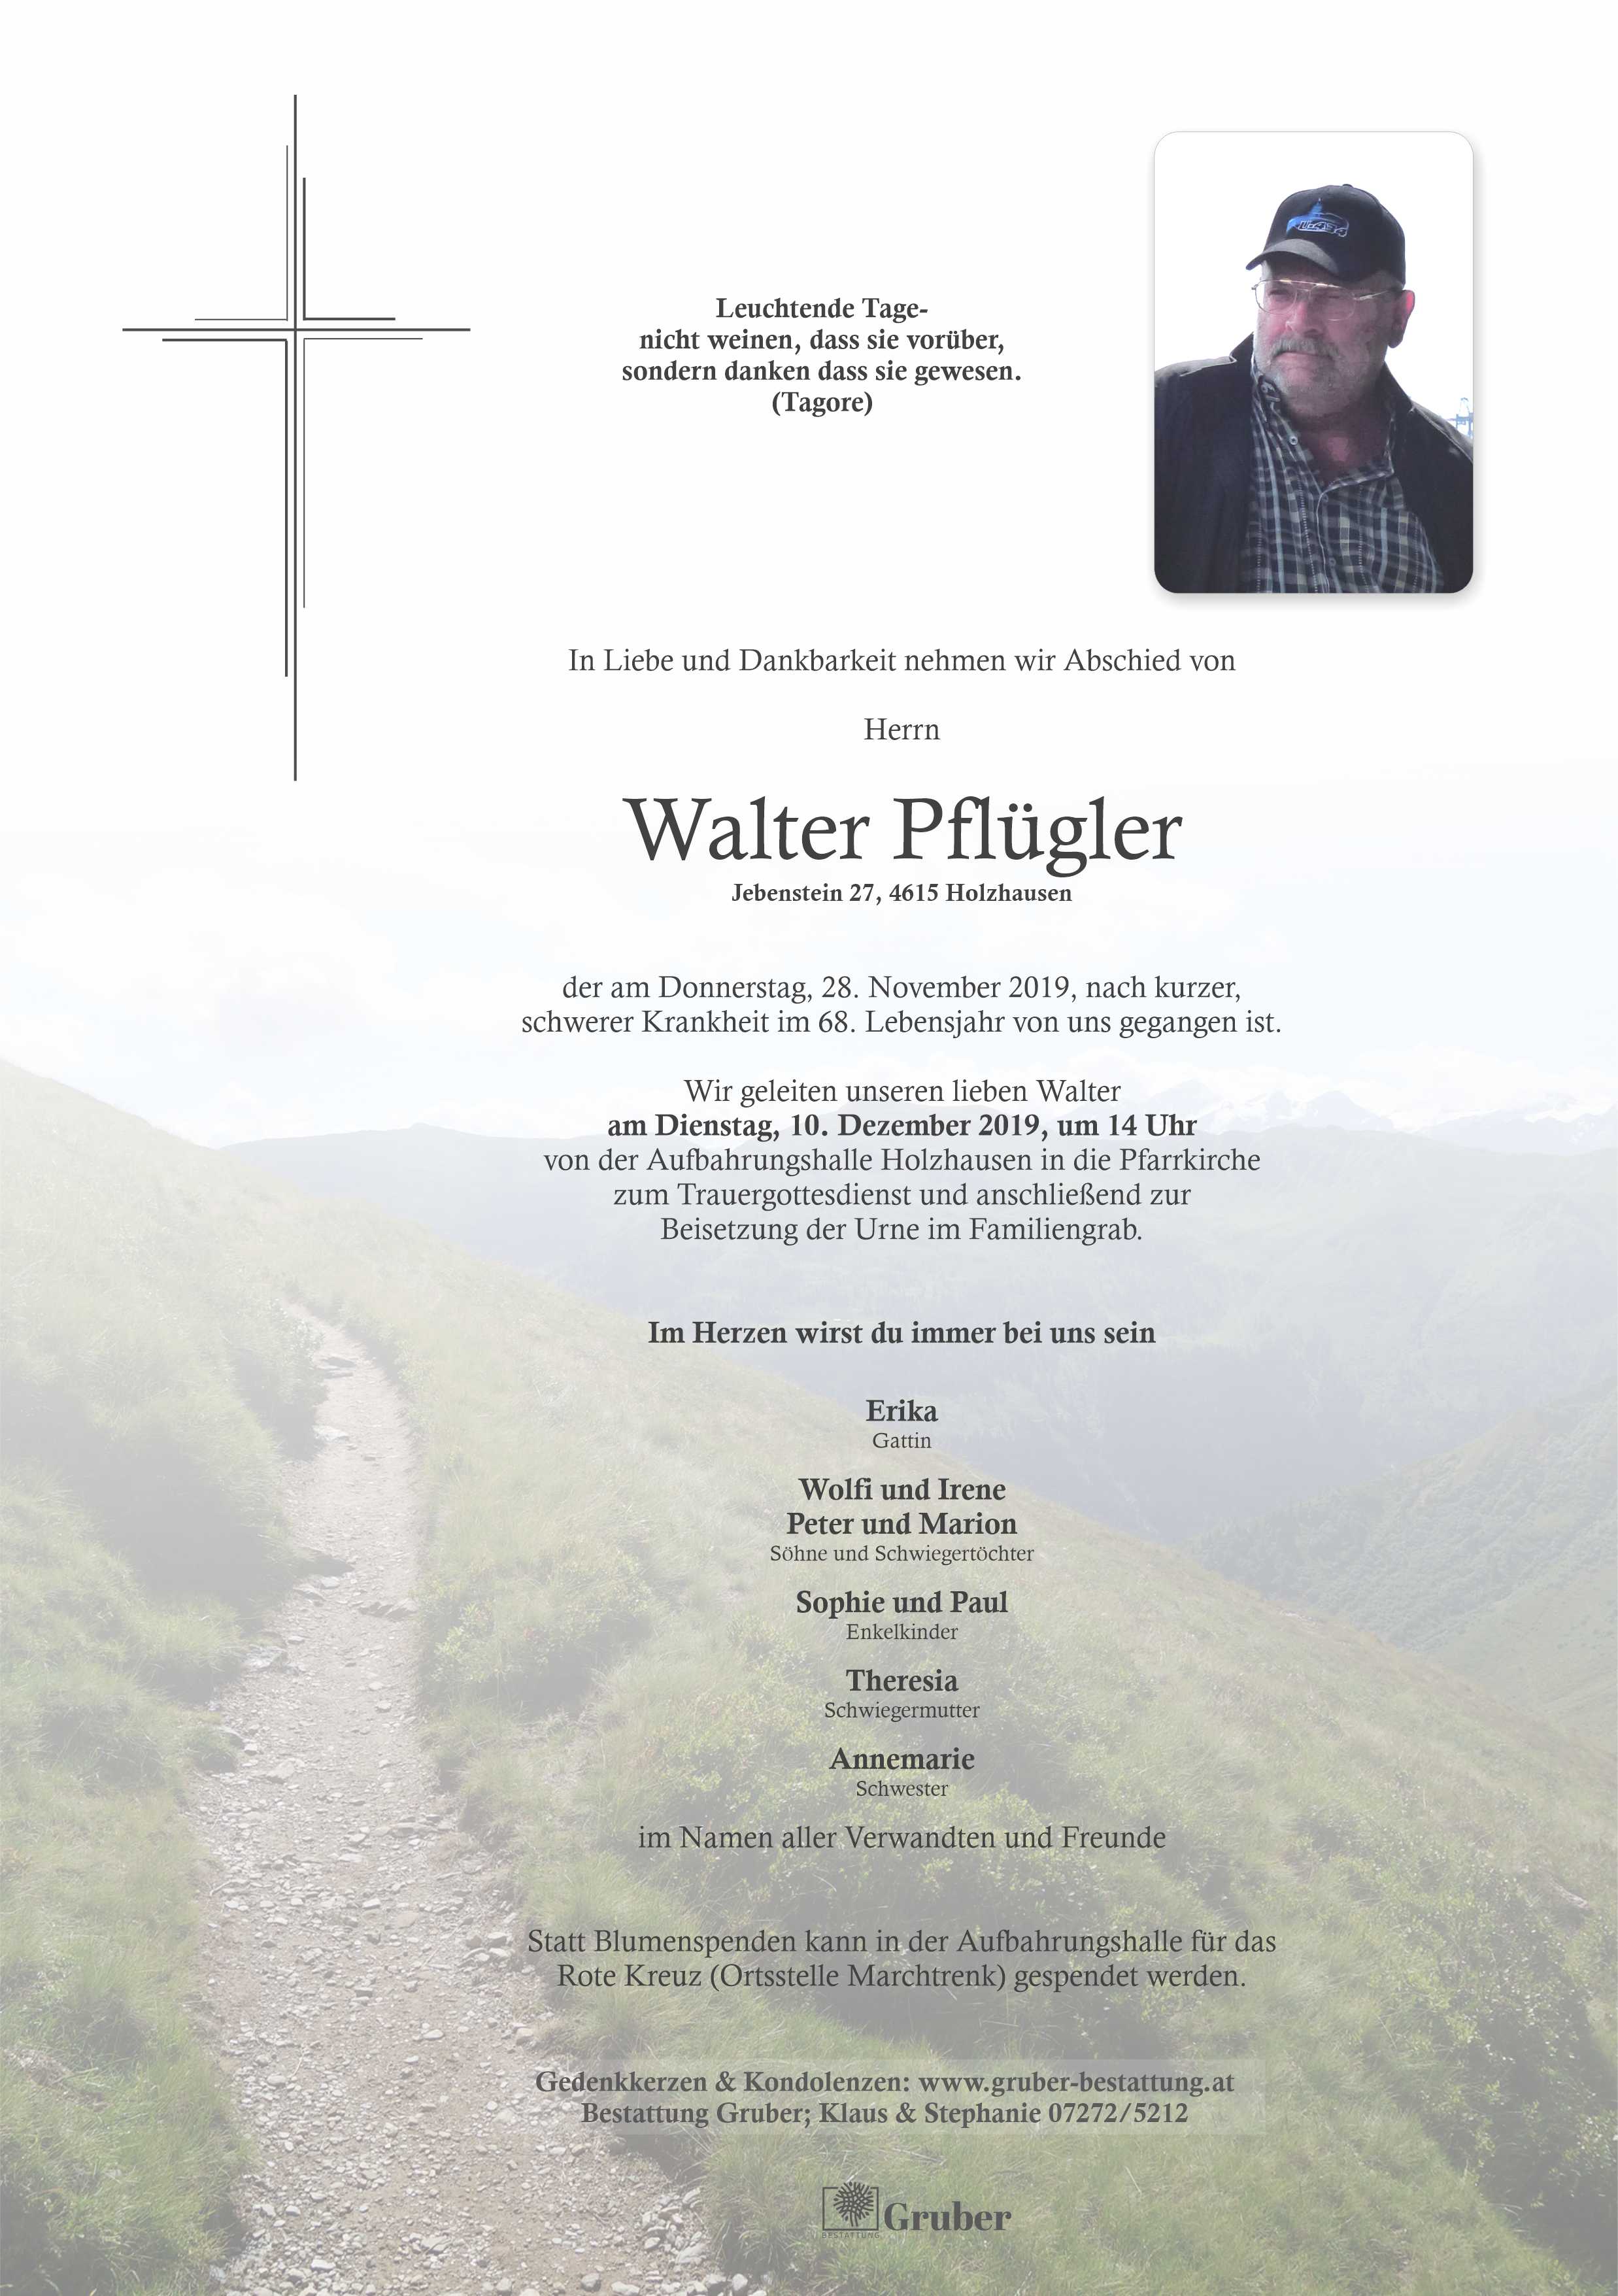 Walter Pflügler (Holzhausen)